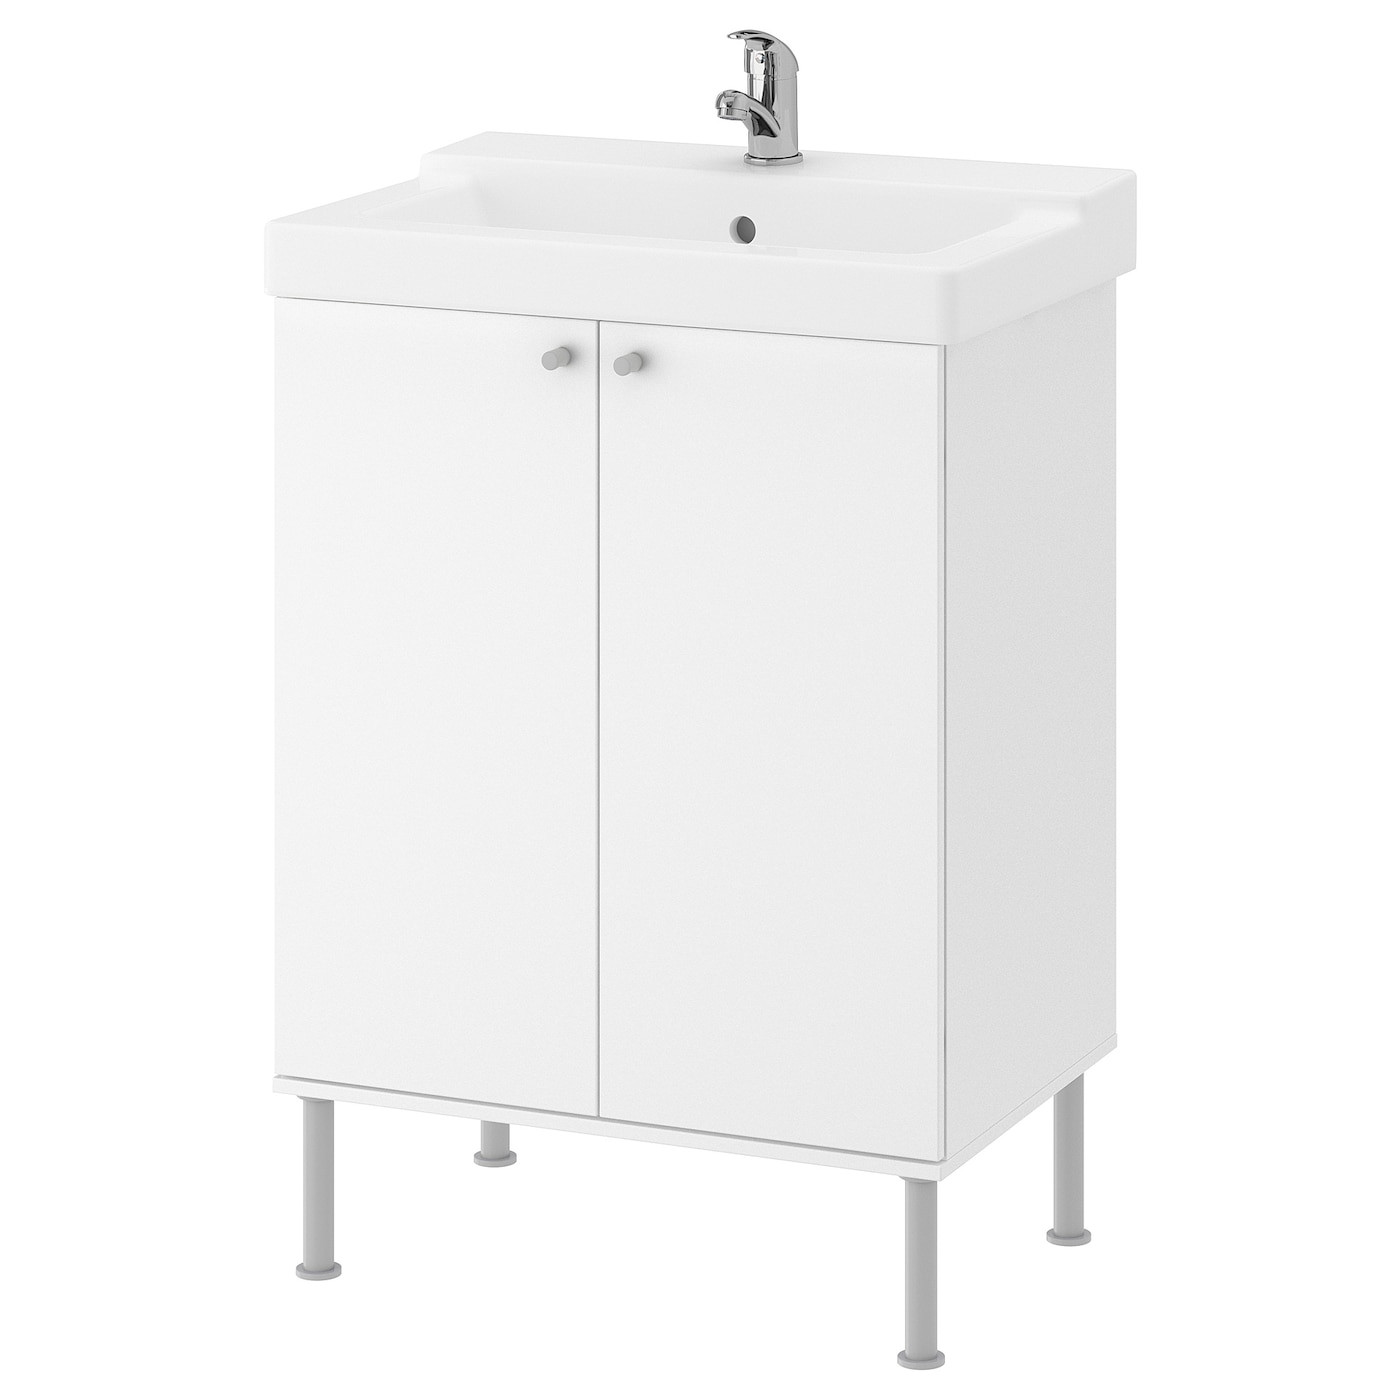 Ikea White Bathroom Cabinet
 FULLEN TÄLLEVIKEN Bathroom vanity white Olskär faucet